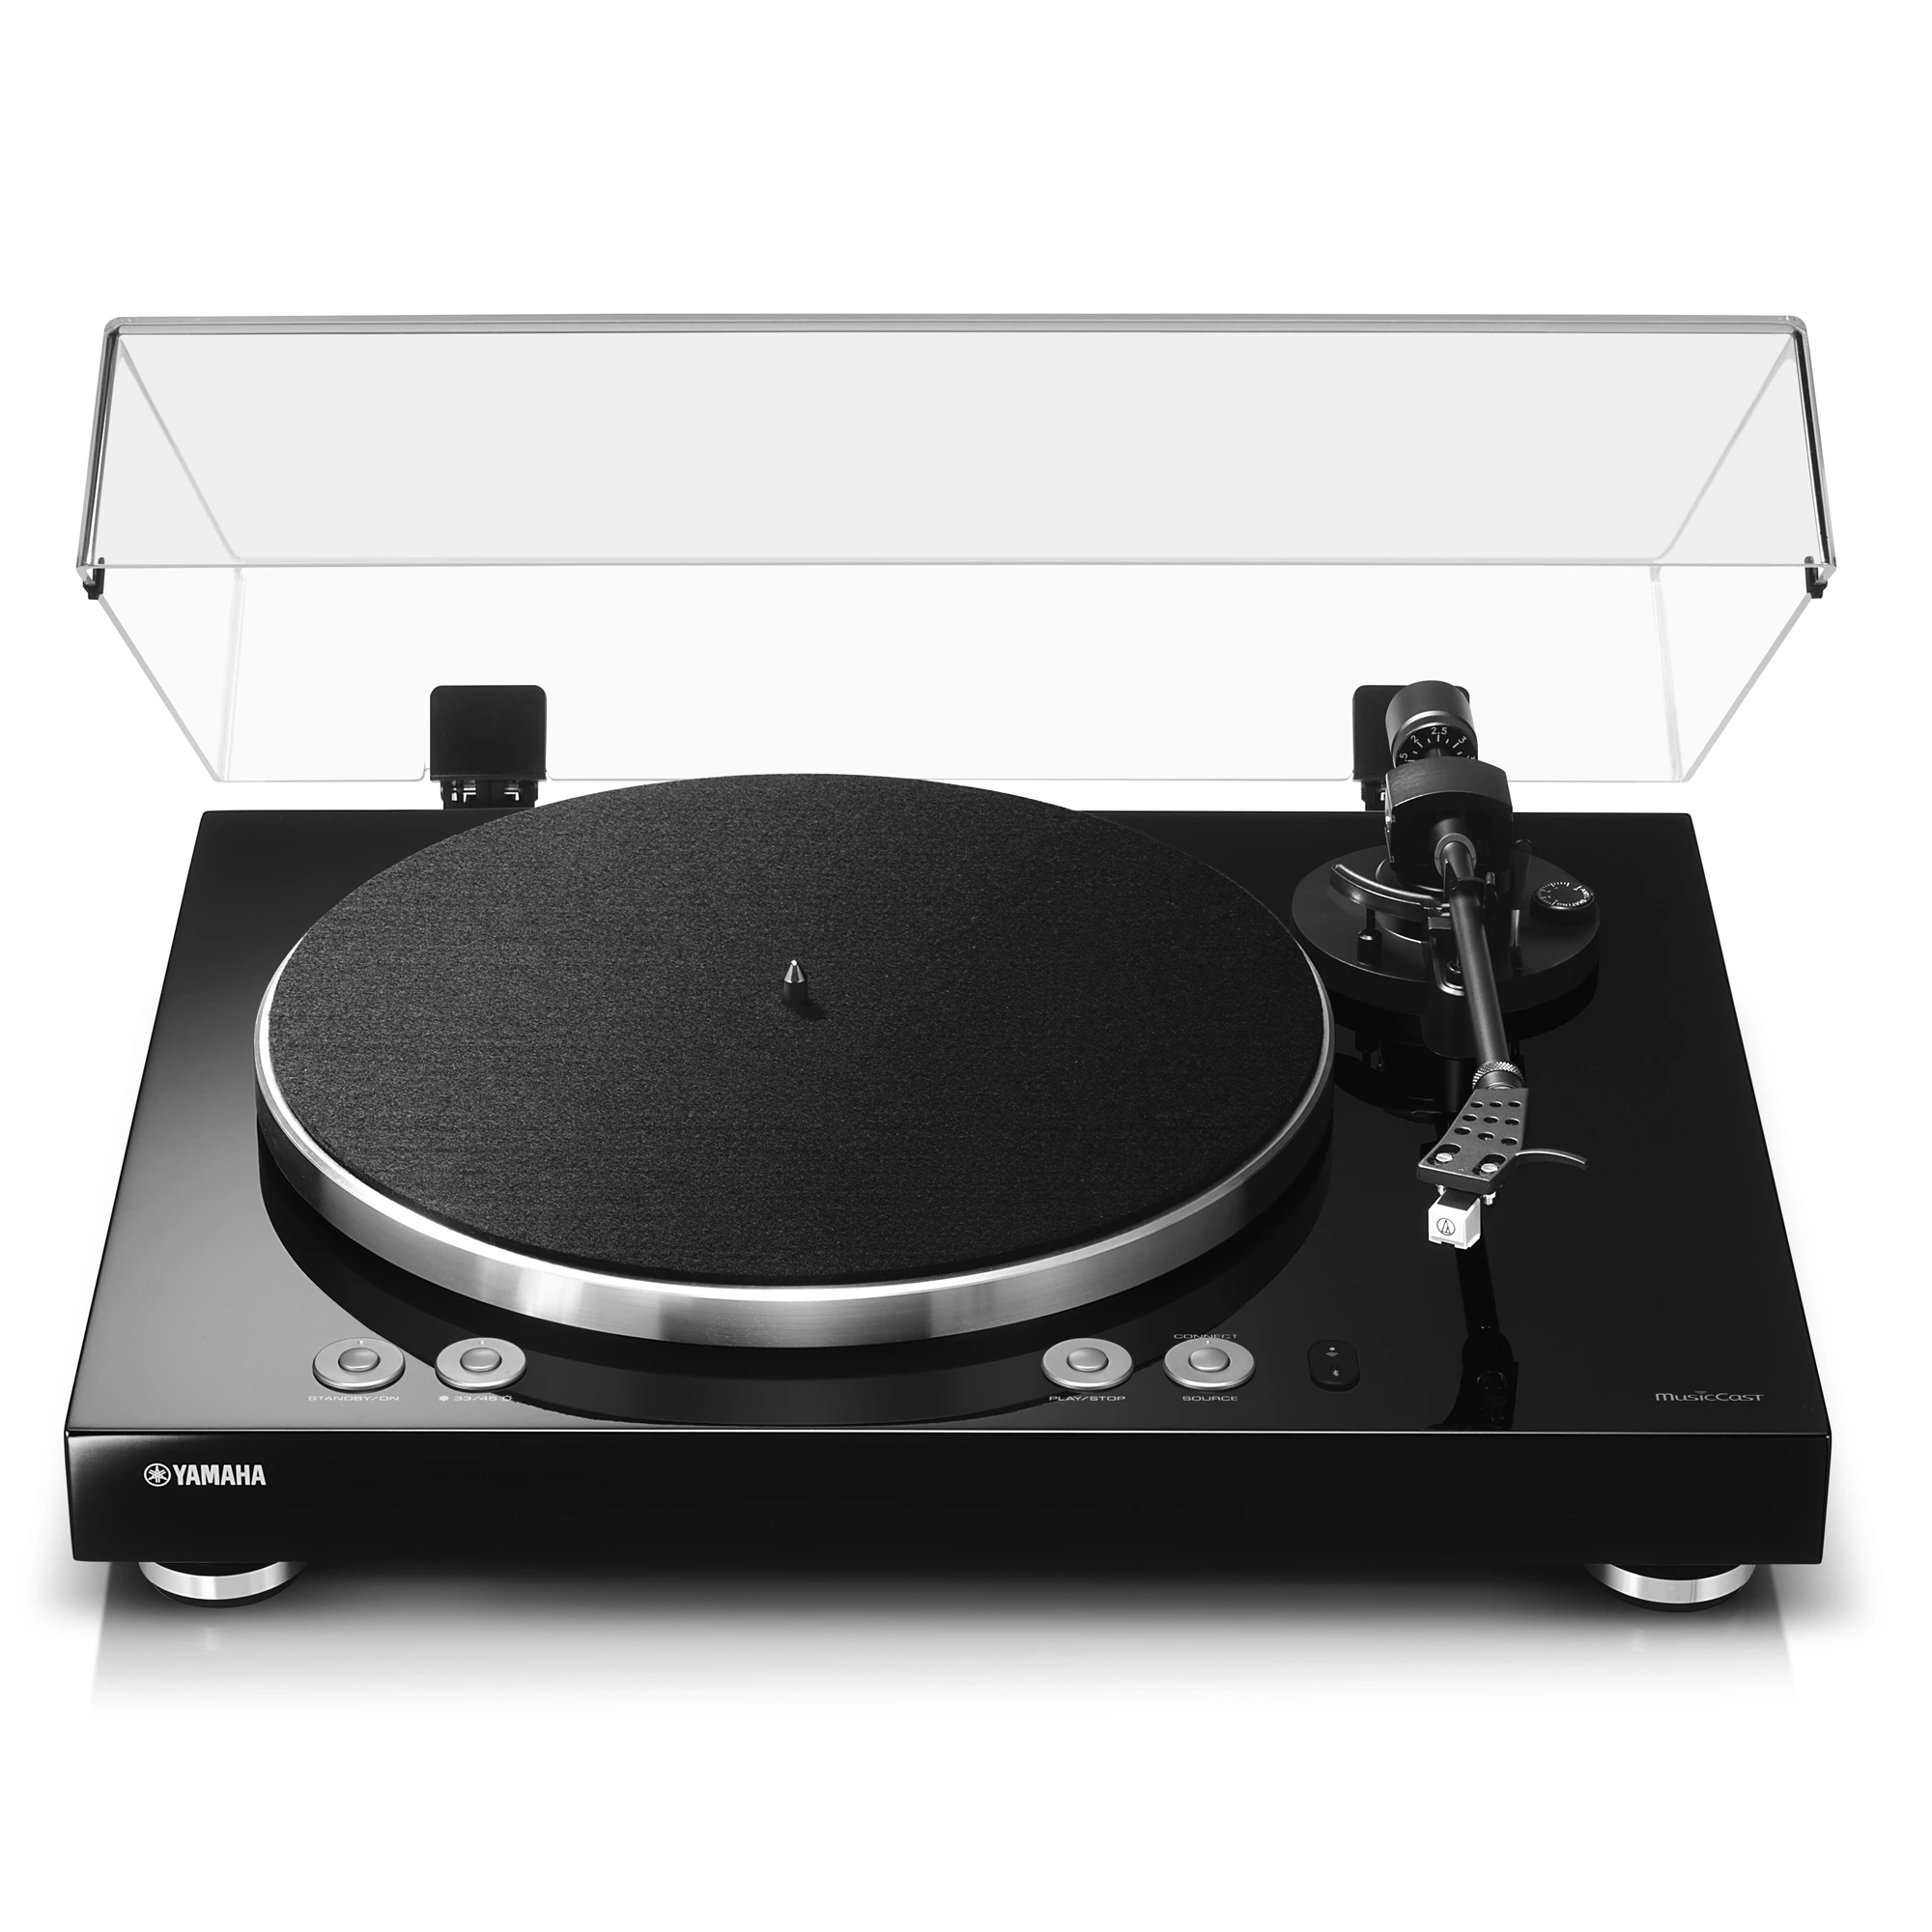 Pickup-uri - Pick-up Yamaha MusicCast Vinyl 500 Black, audioclub.ro